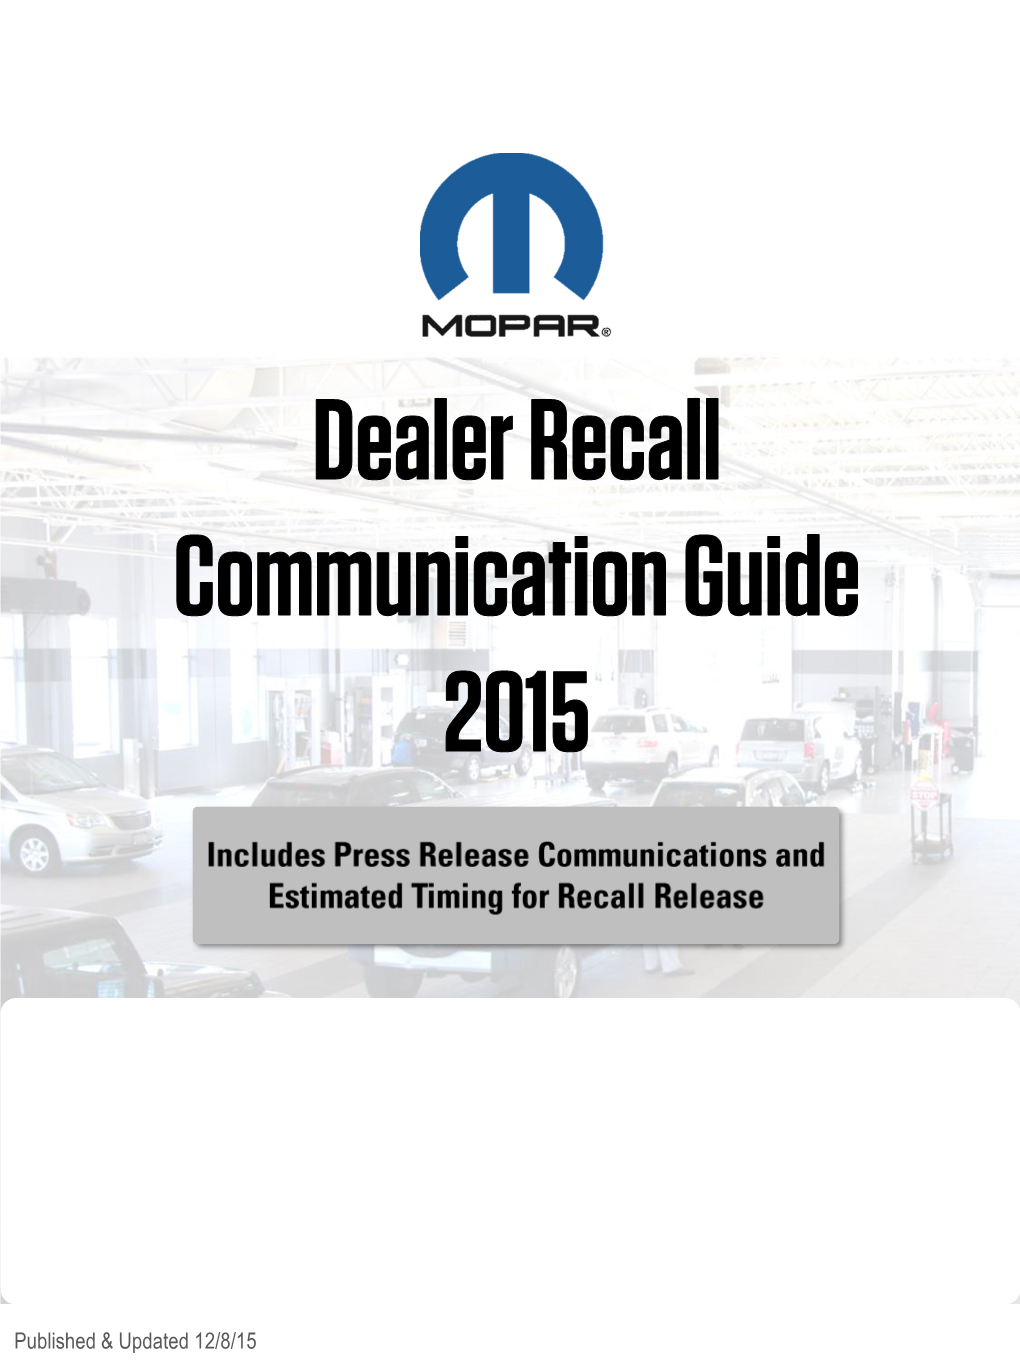 Dealer Recall Communication Guide 2015